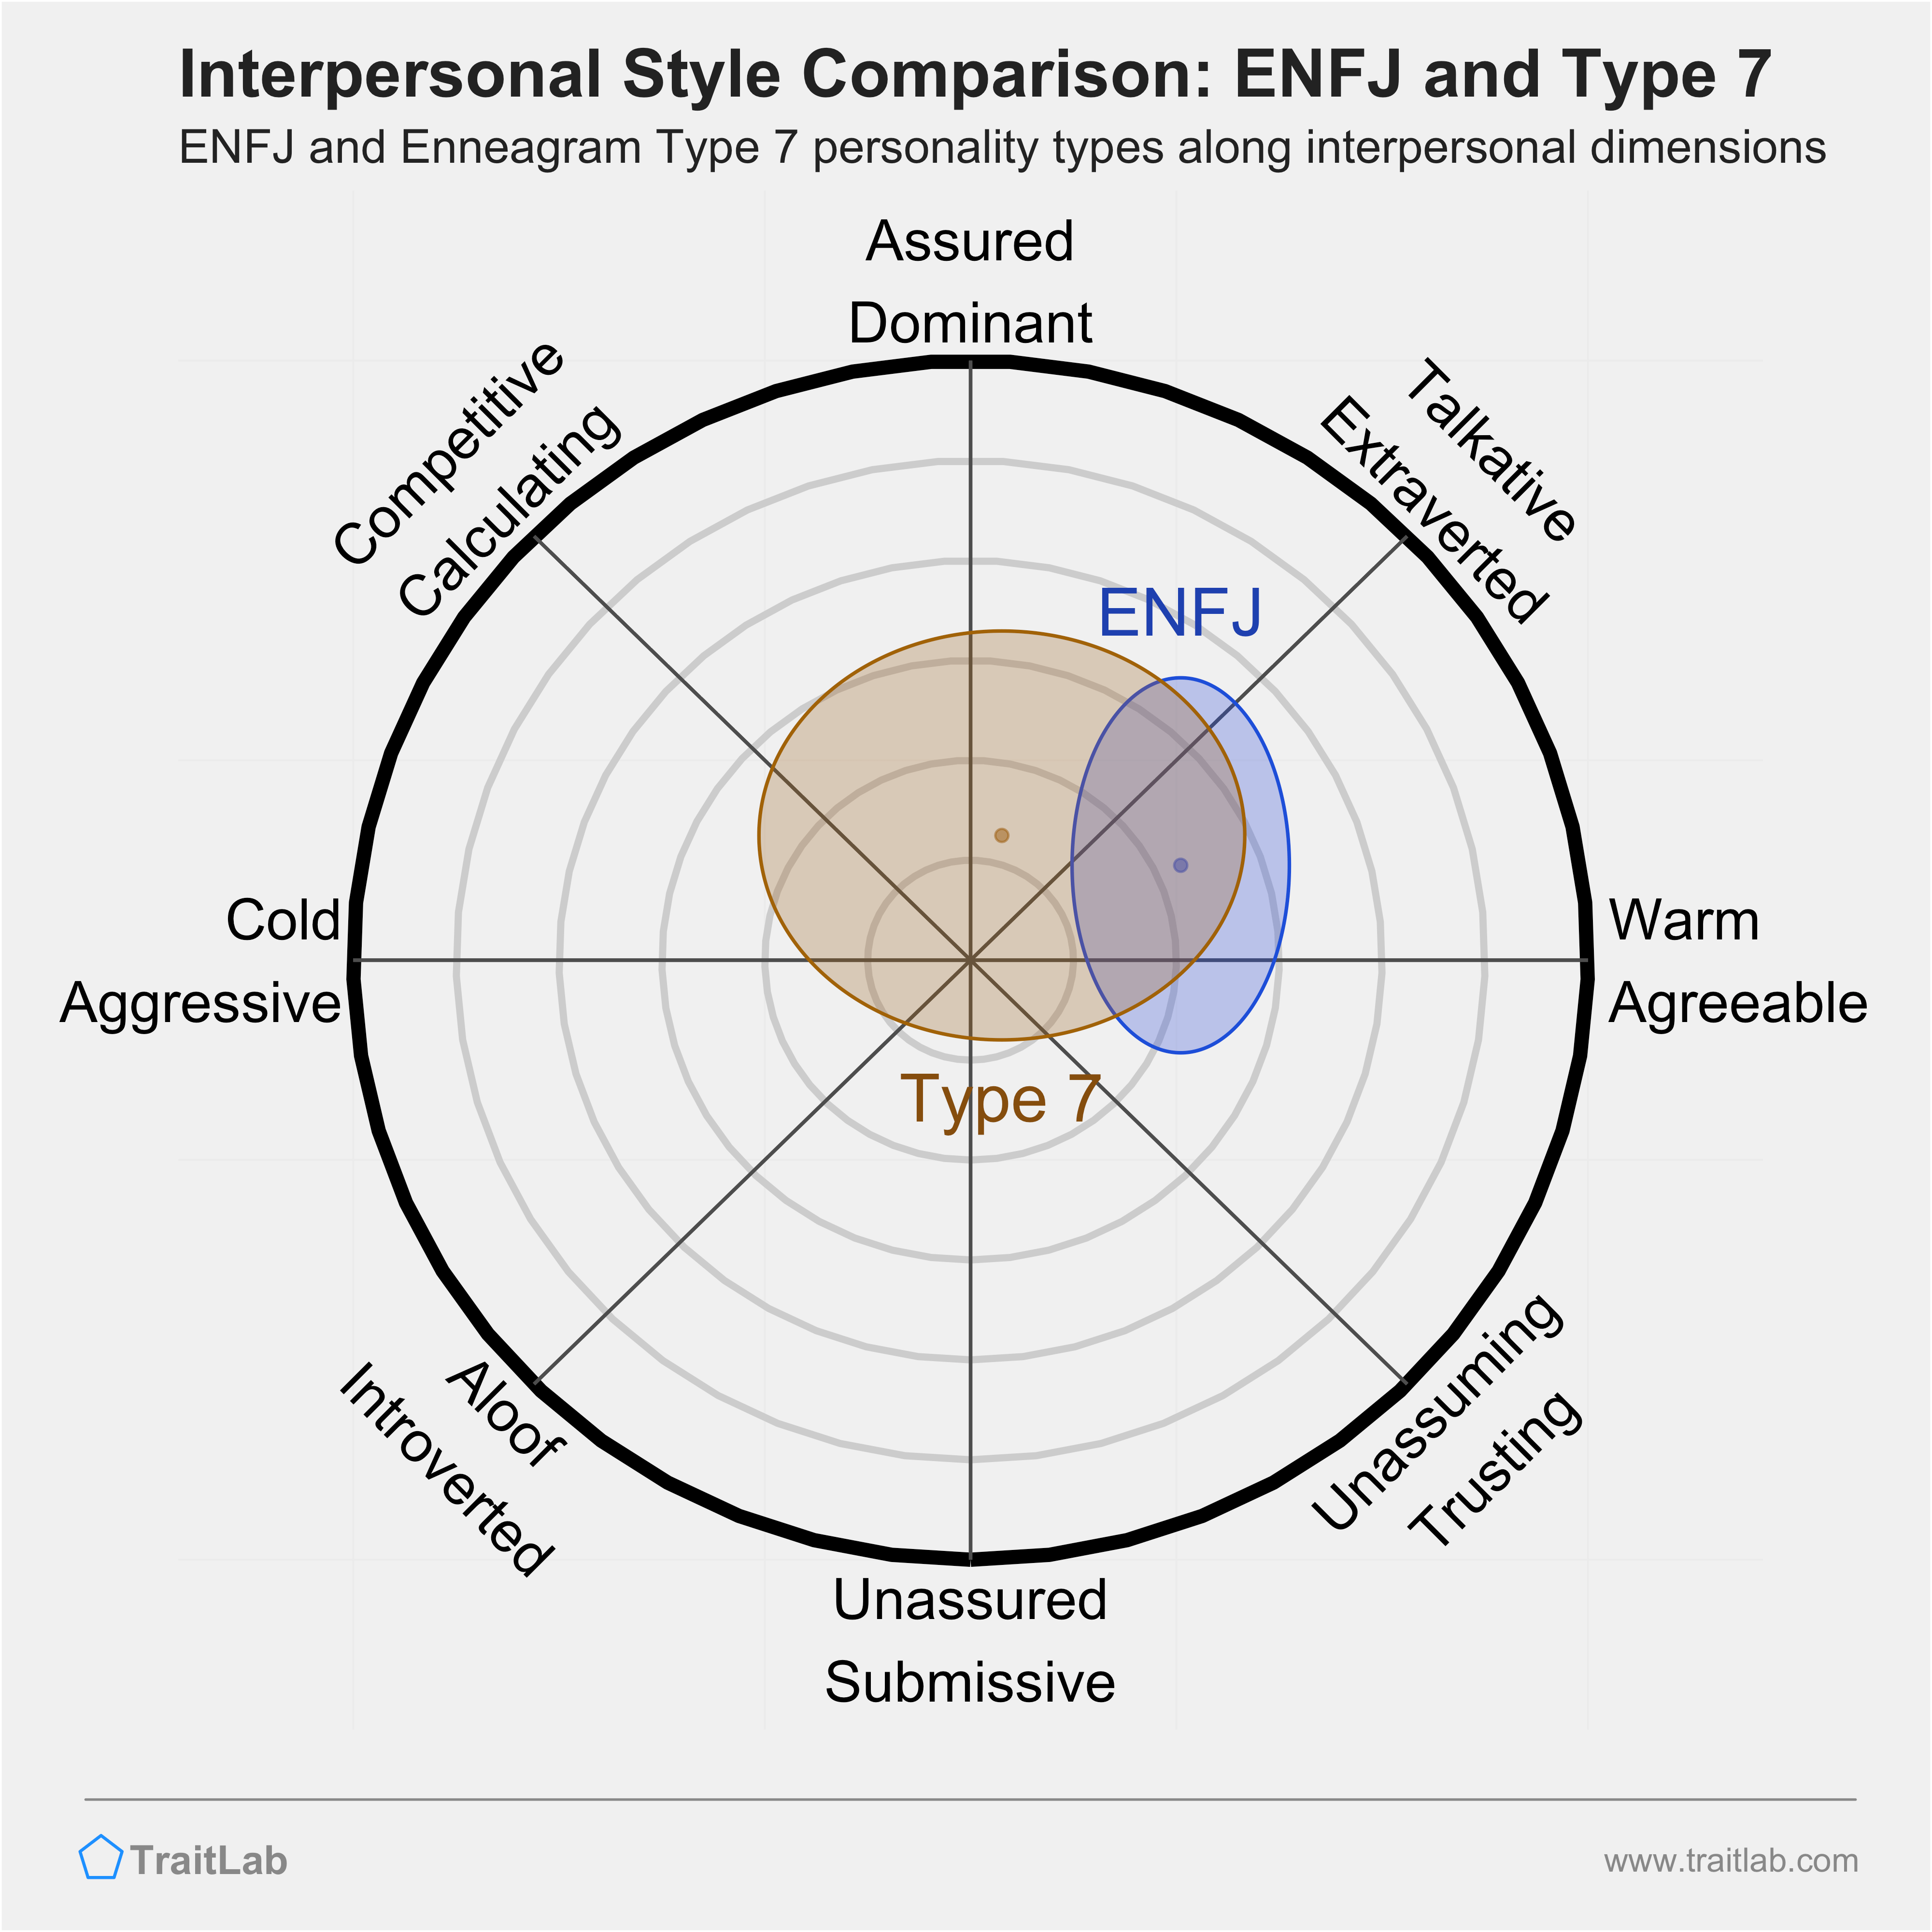 Enneagram ENFJ and Type 7 comparison across interpersonal dimensions